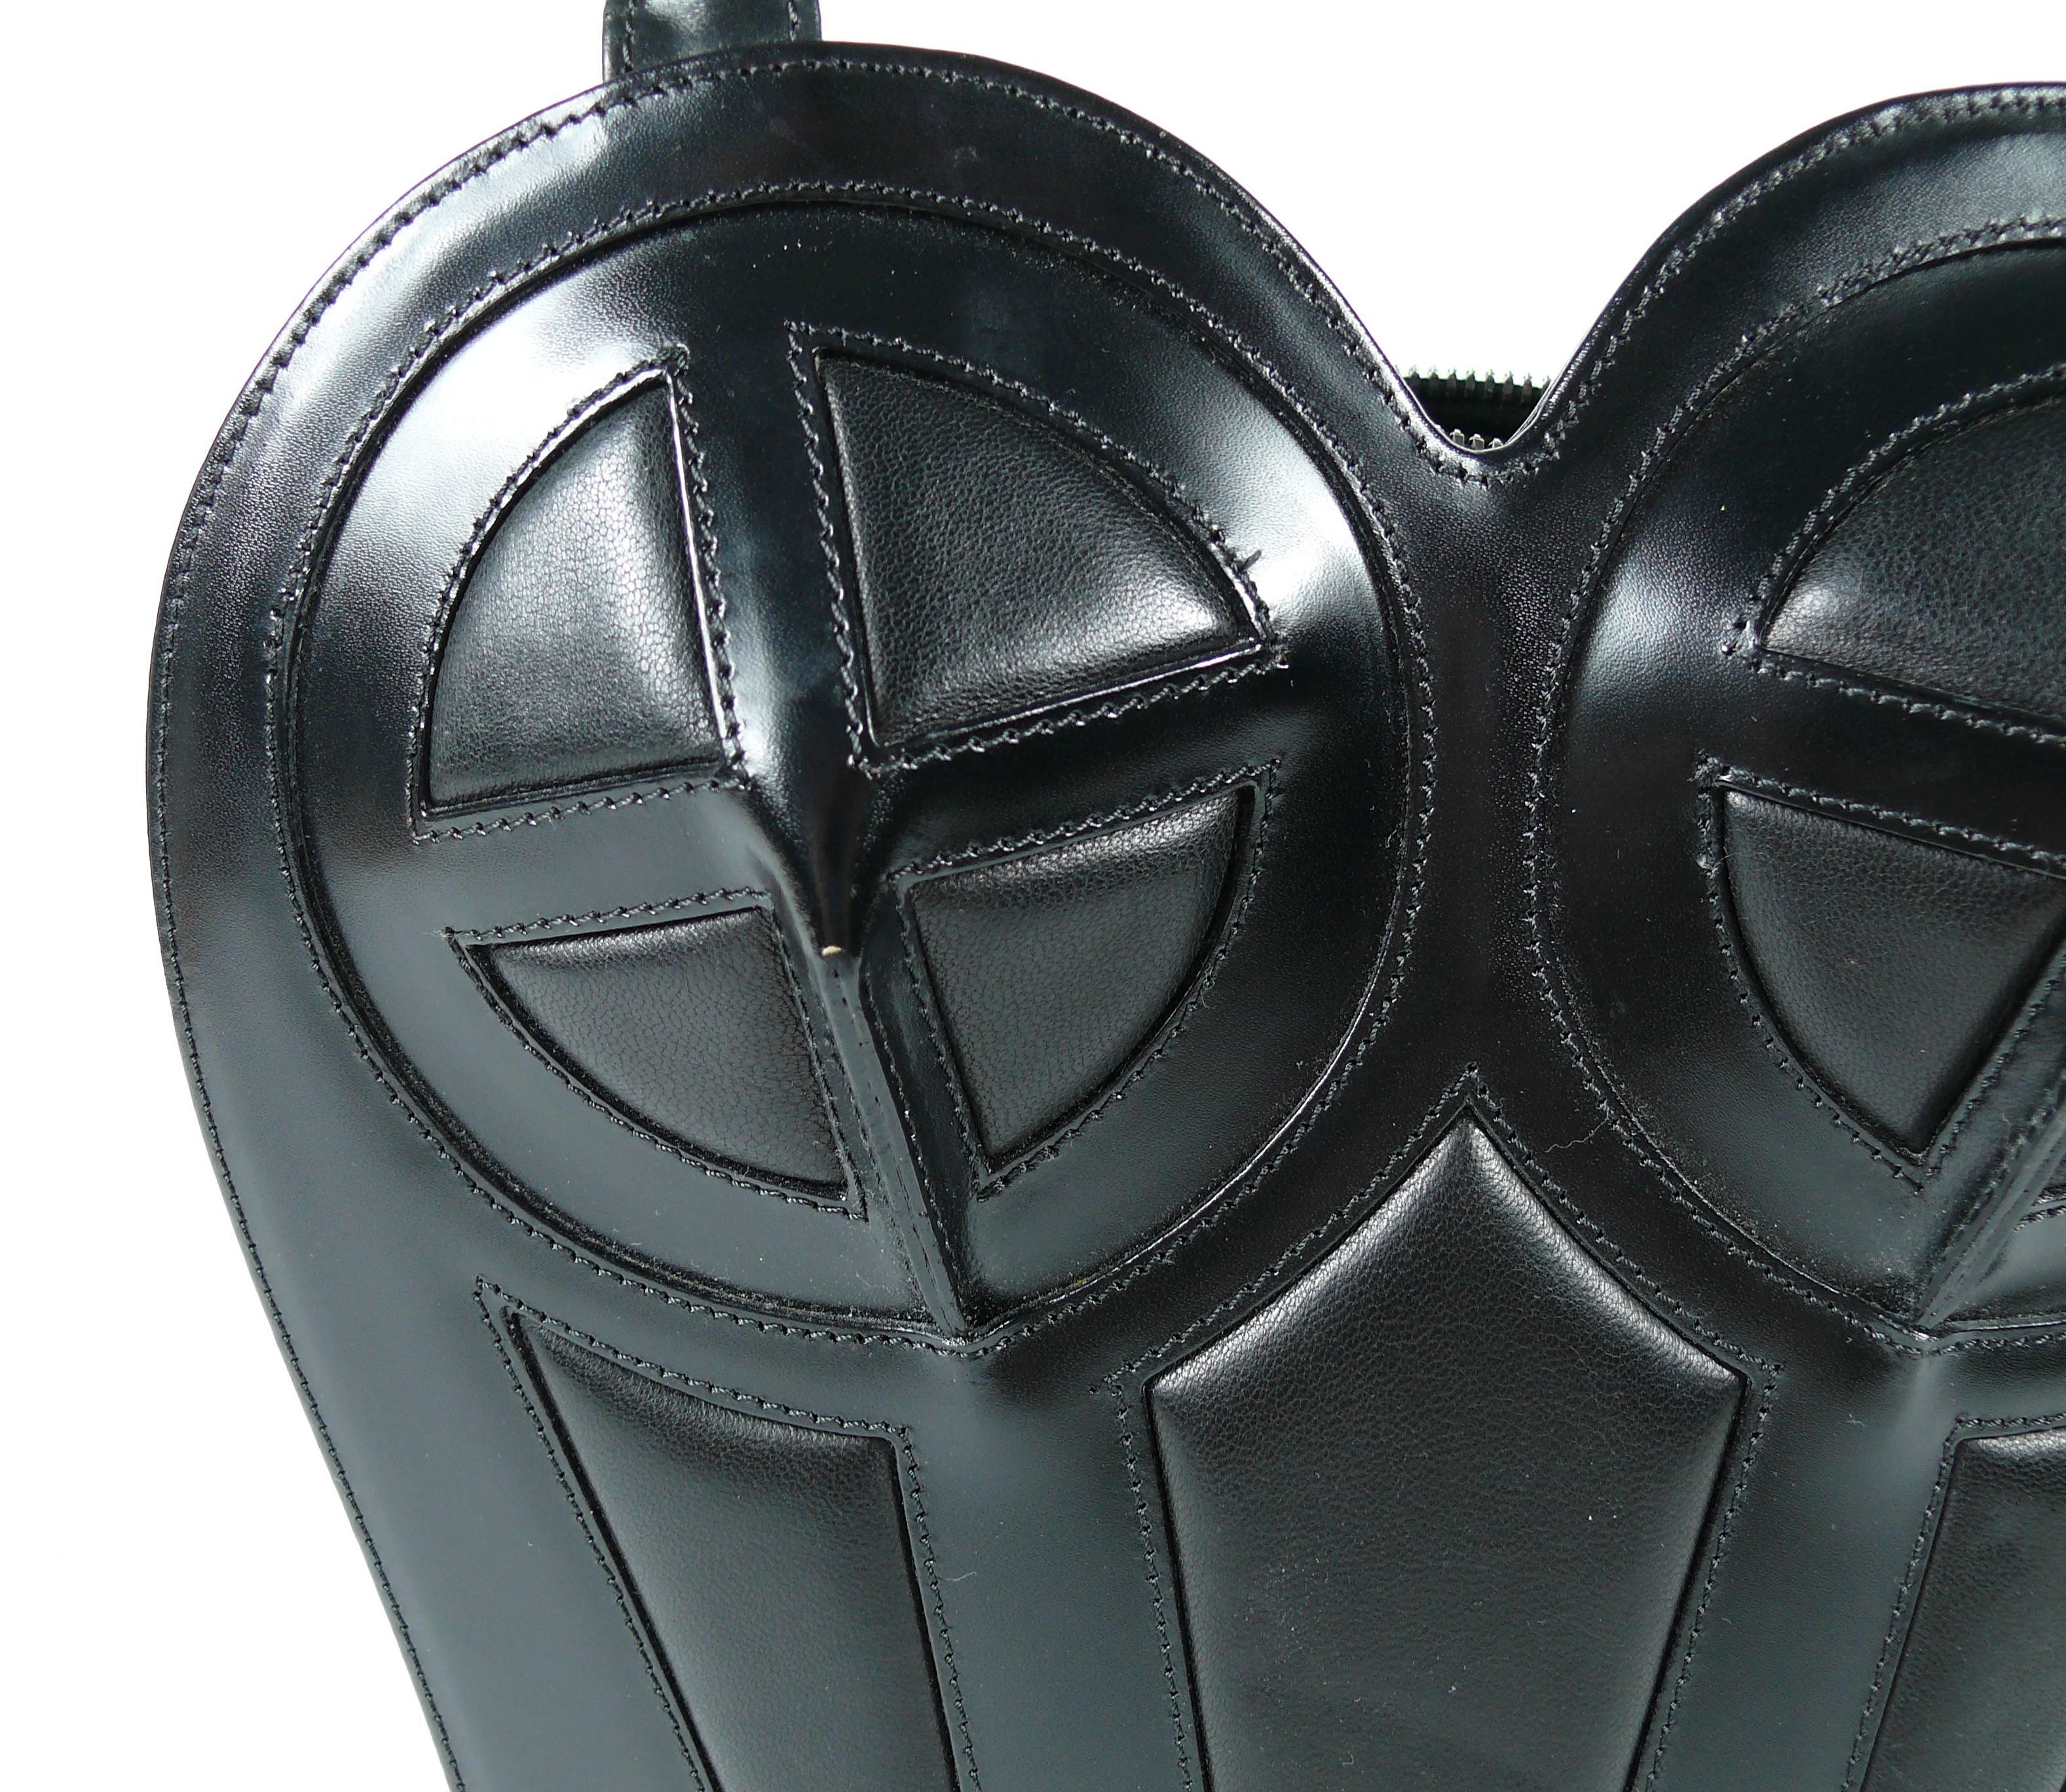 Jean Paul Gaultier Rare 1998 Iconic Black Leather Bustier Handbag 3